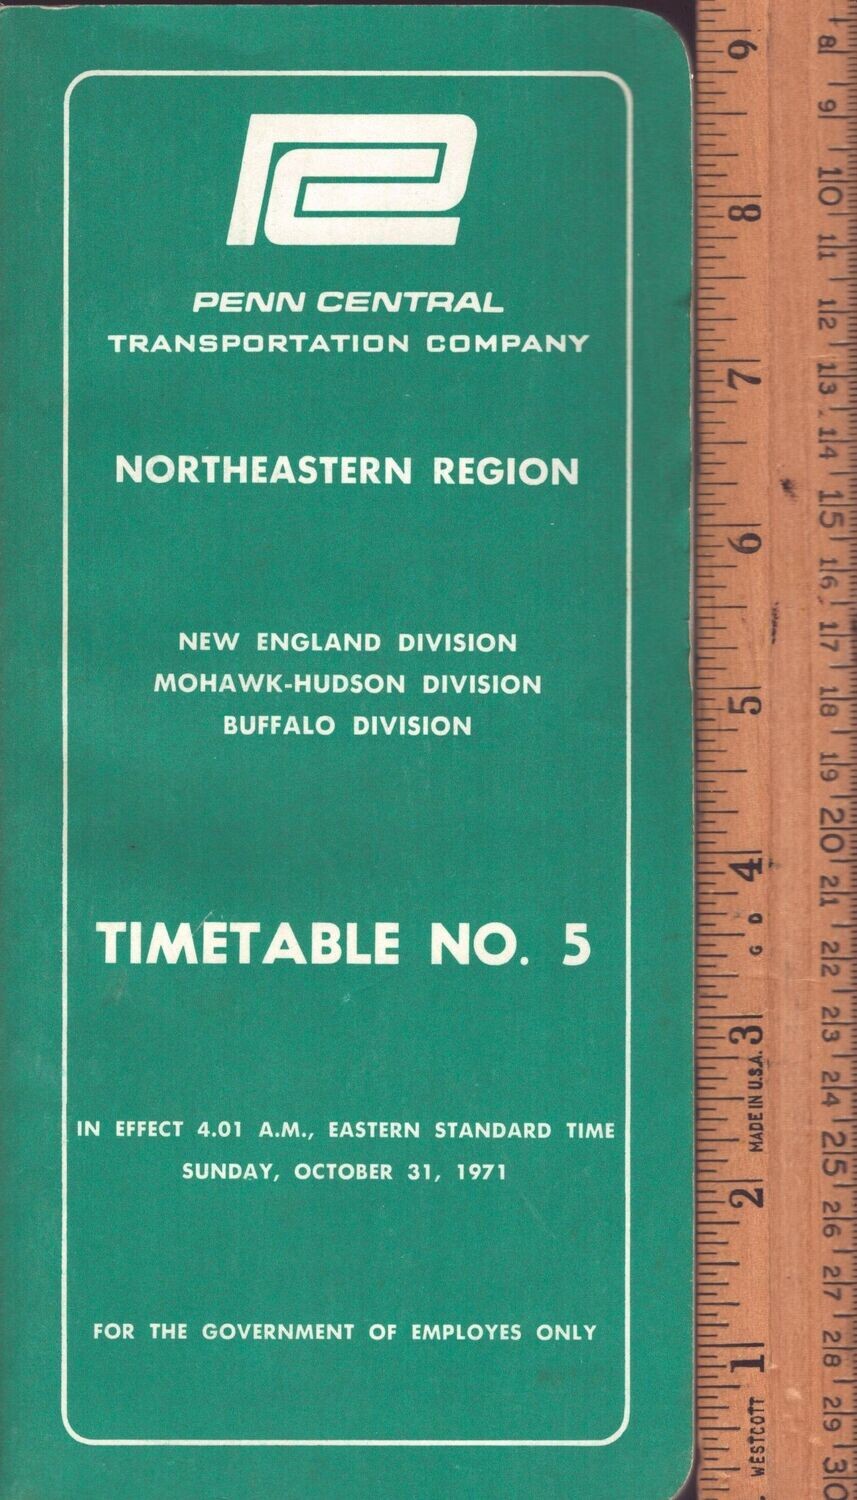 Penn Central Northeastern Region 1971